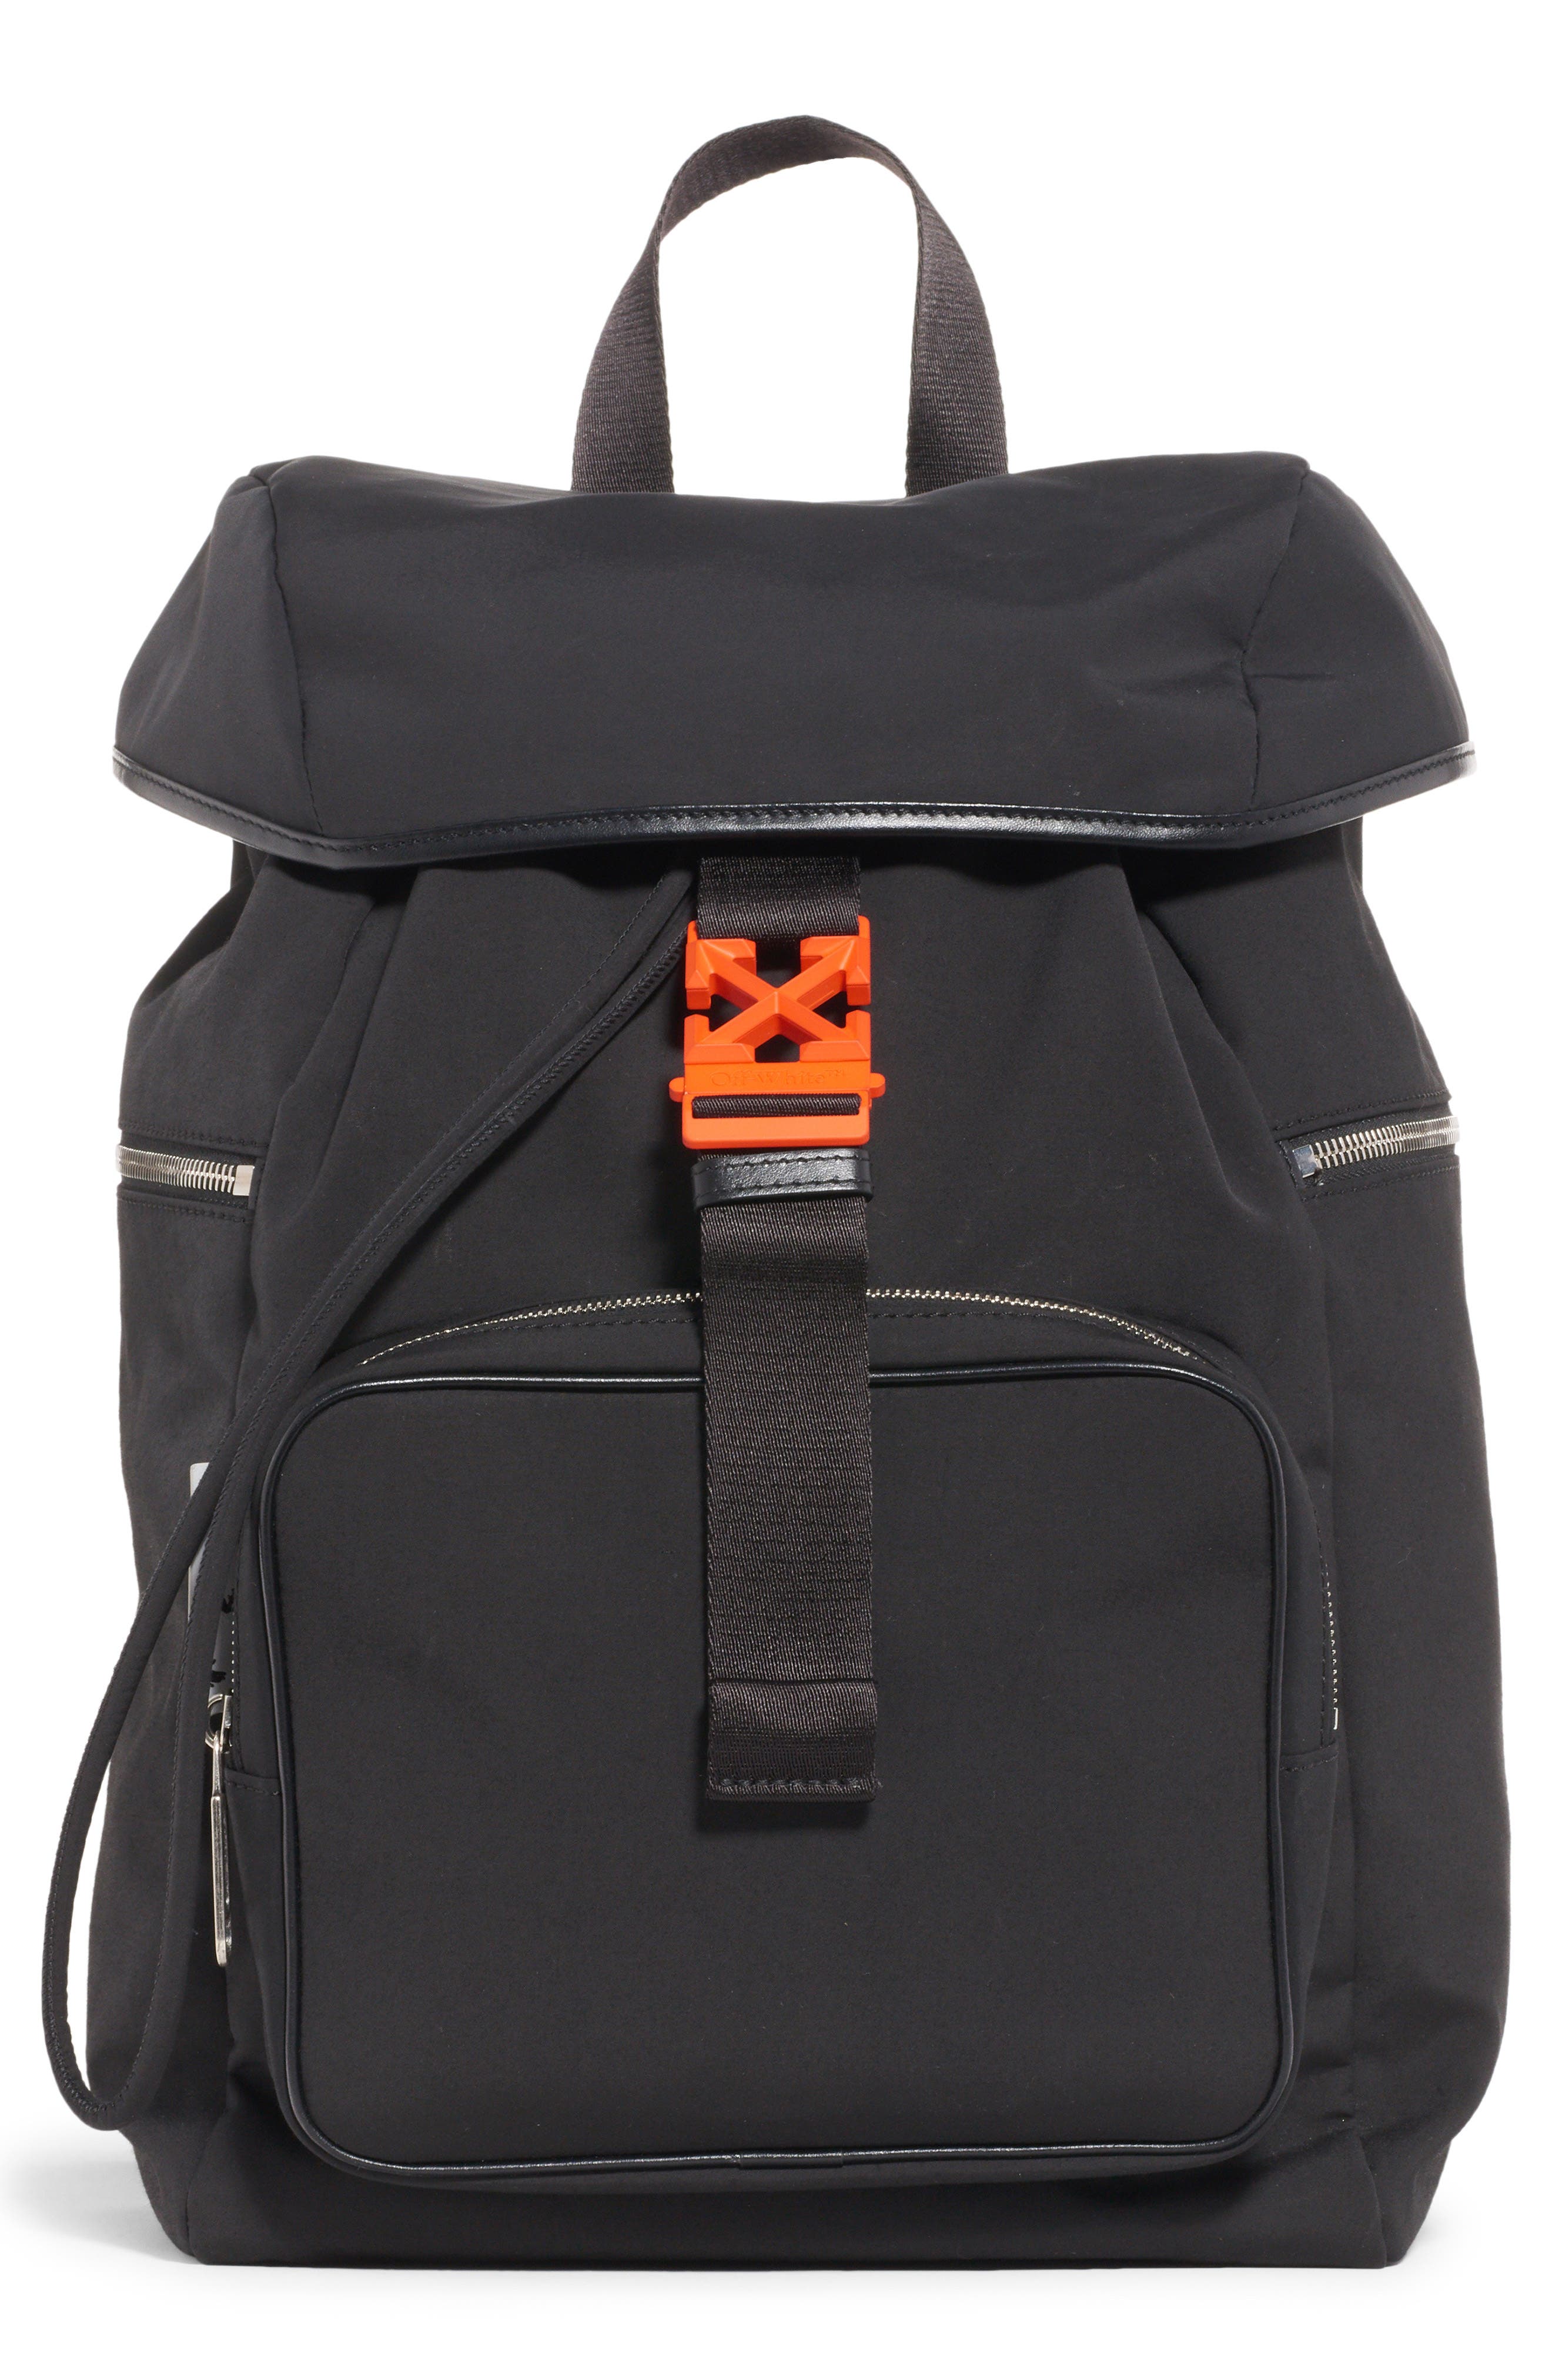 Off-White Arrows Backpack in Black/Black at Nordstrom